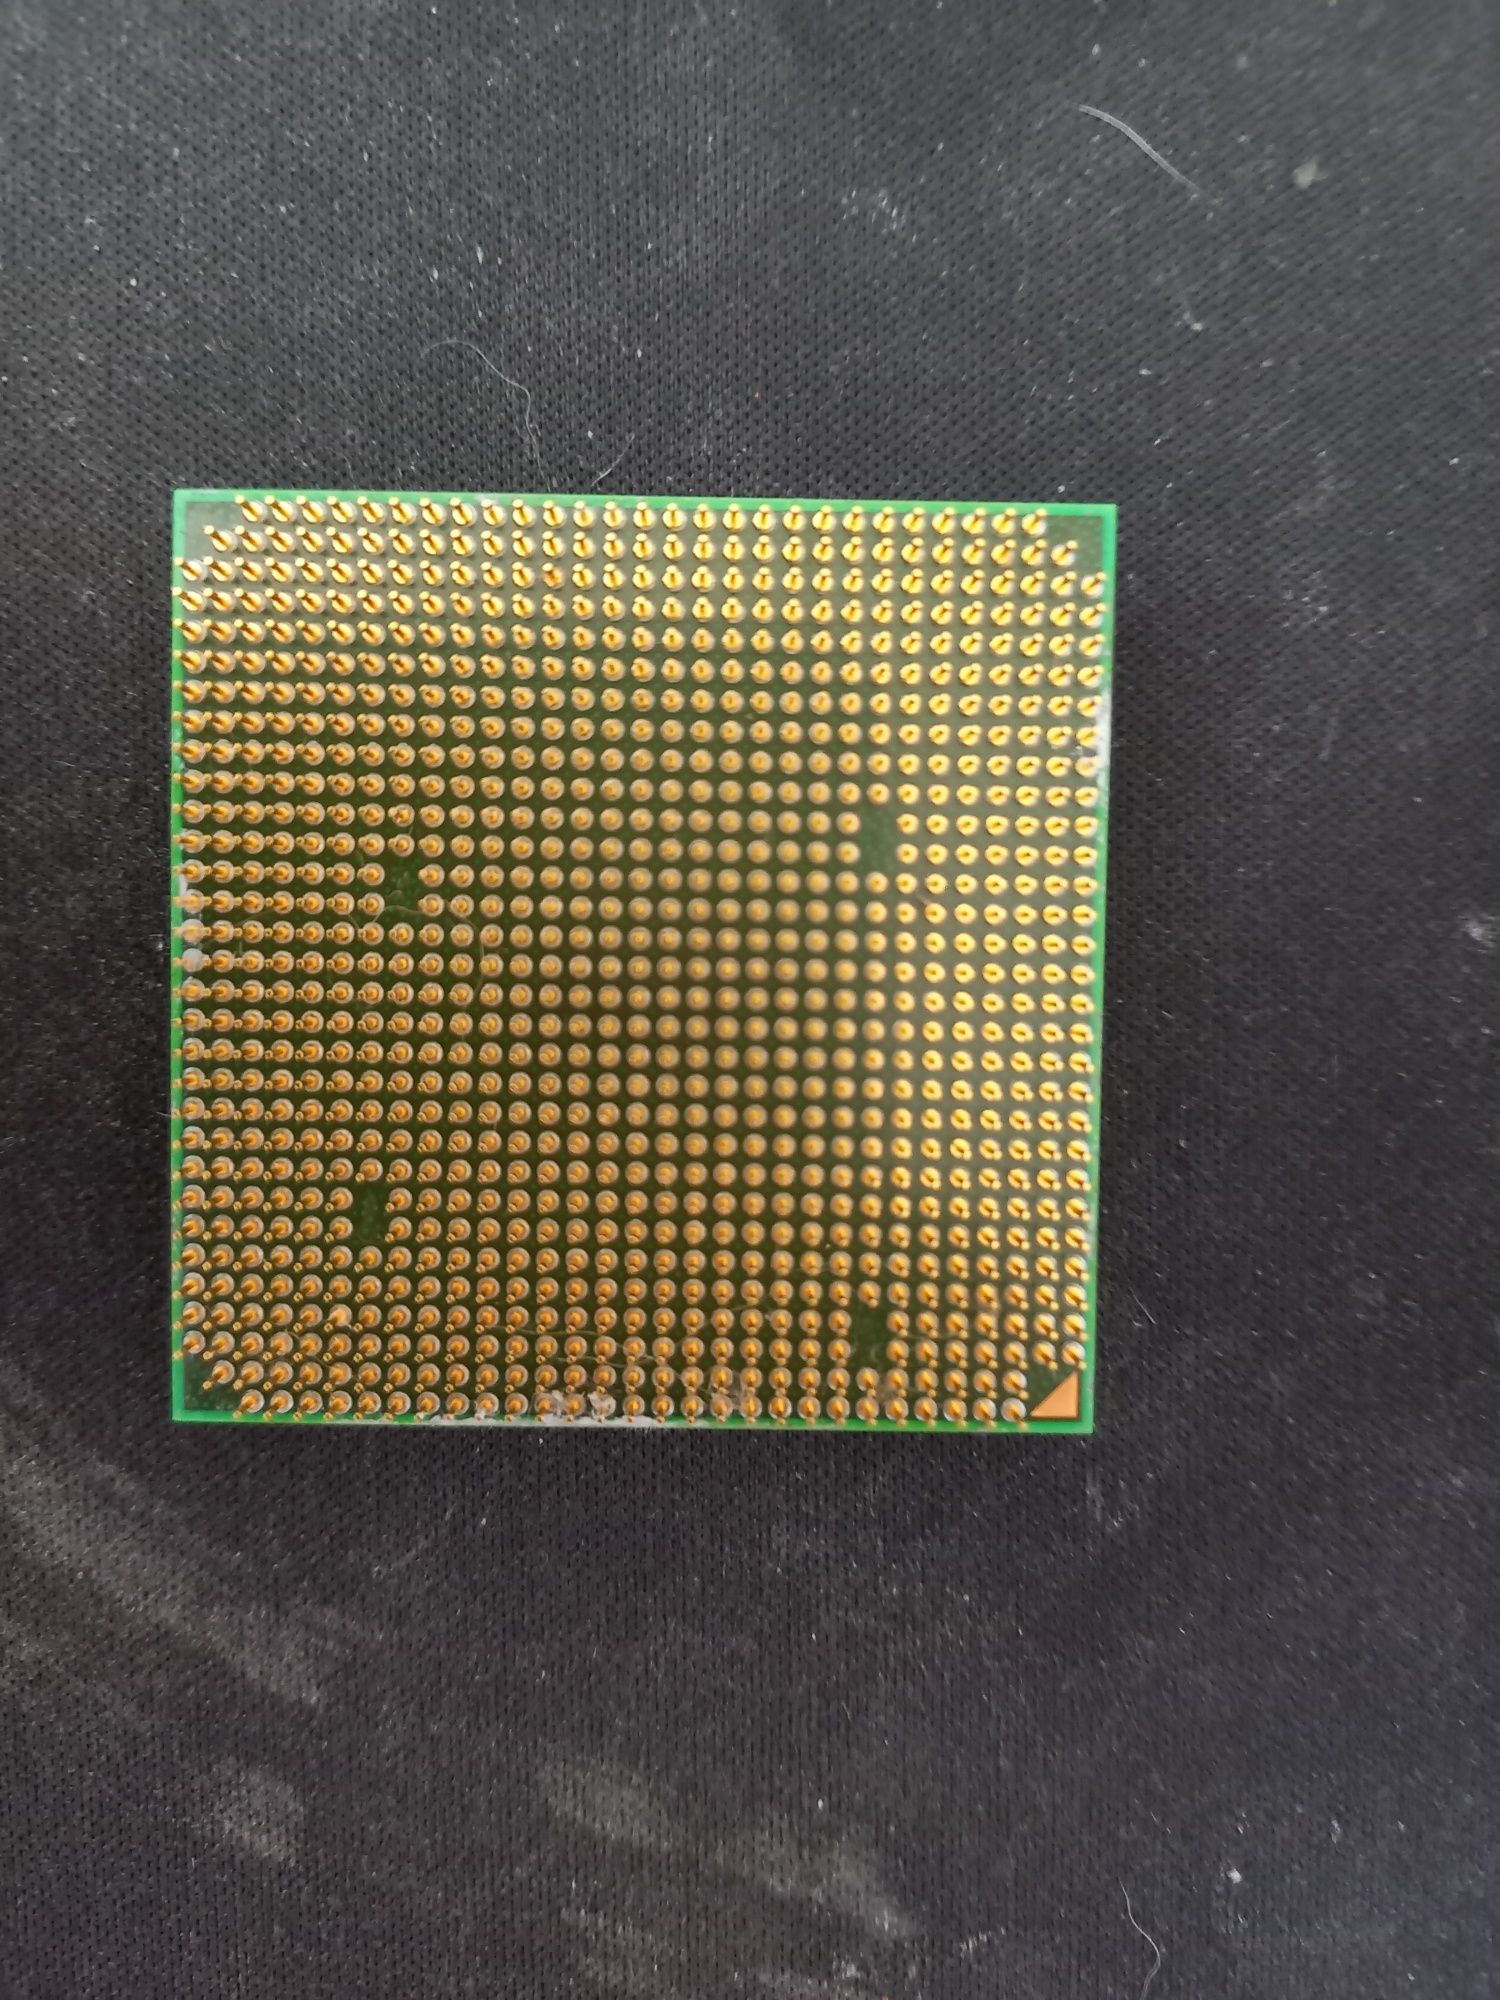 Процессор AMD 2 шт.